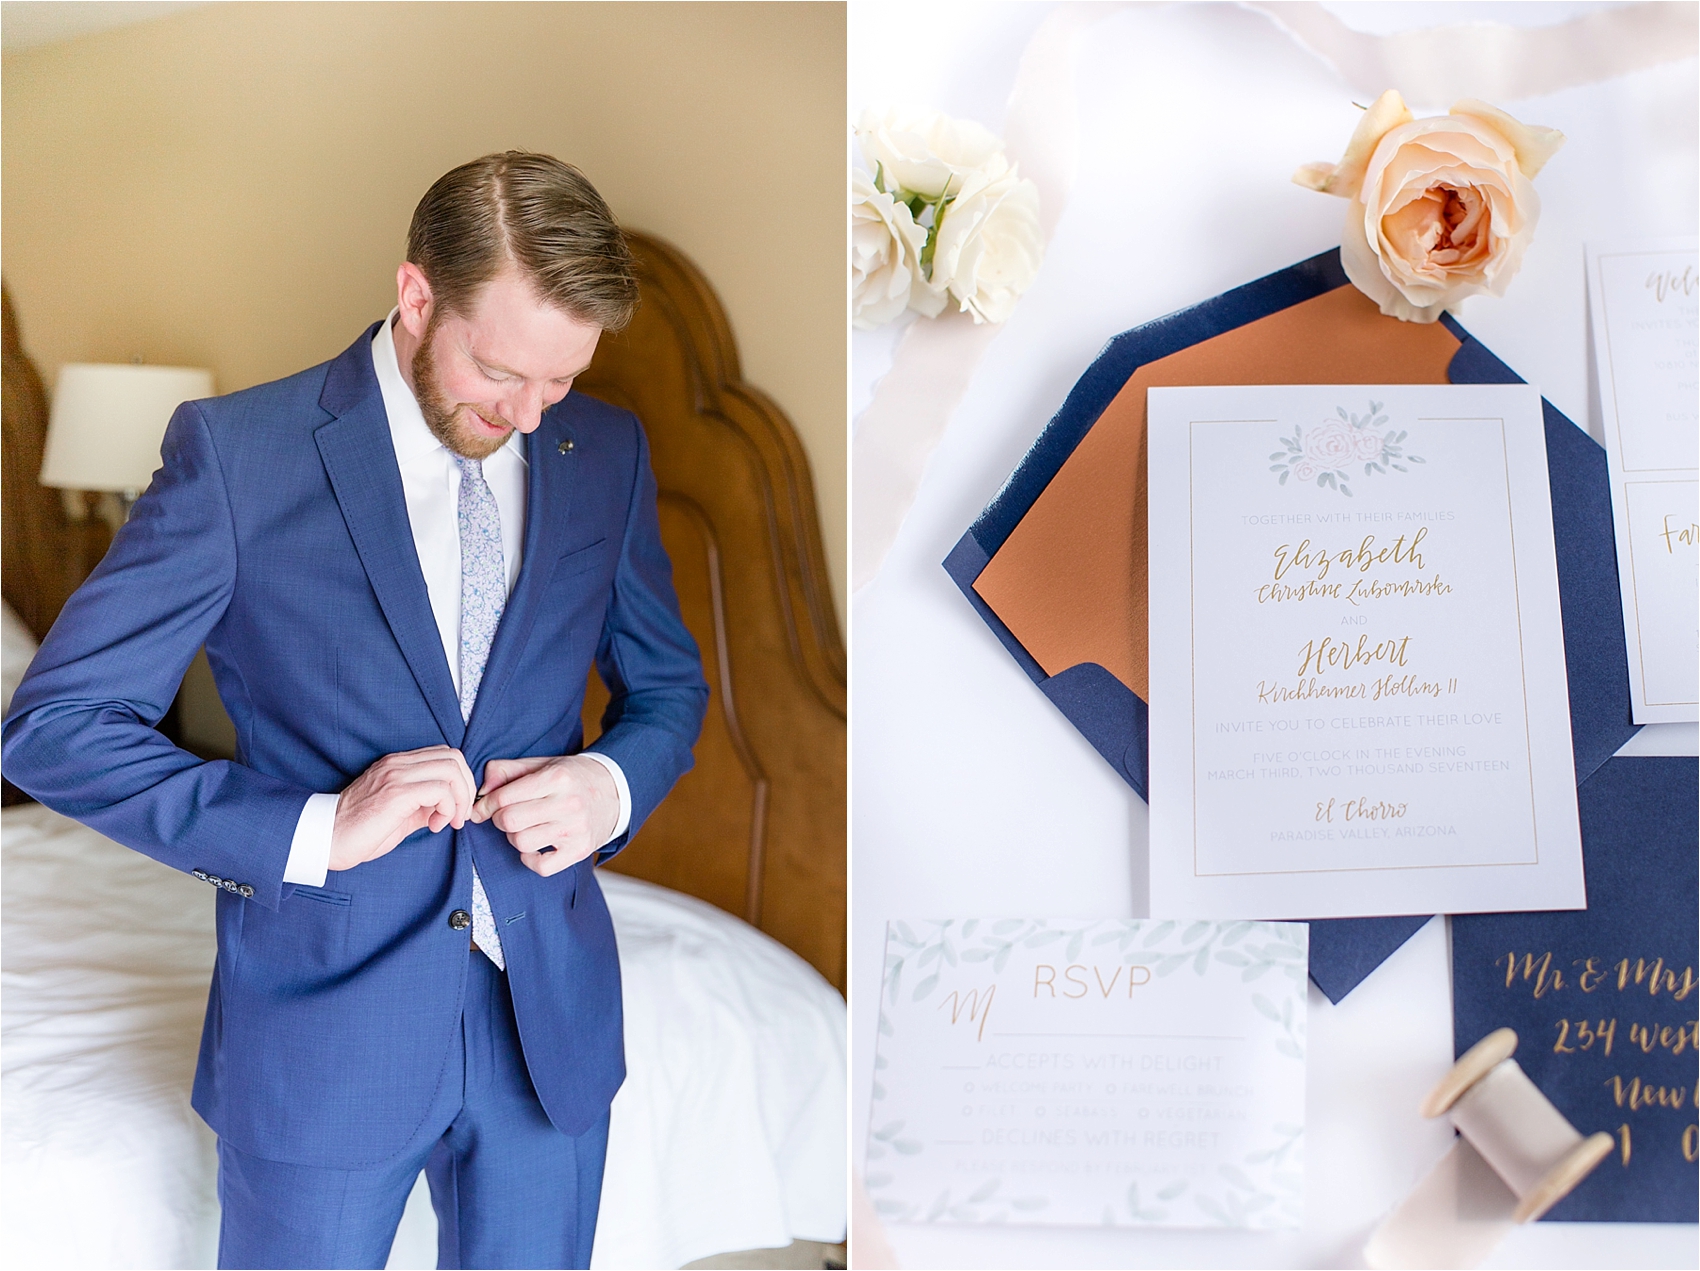 Wedding envelopes match groom's suit